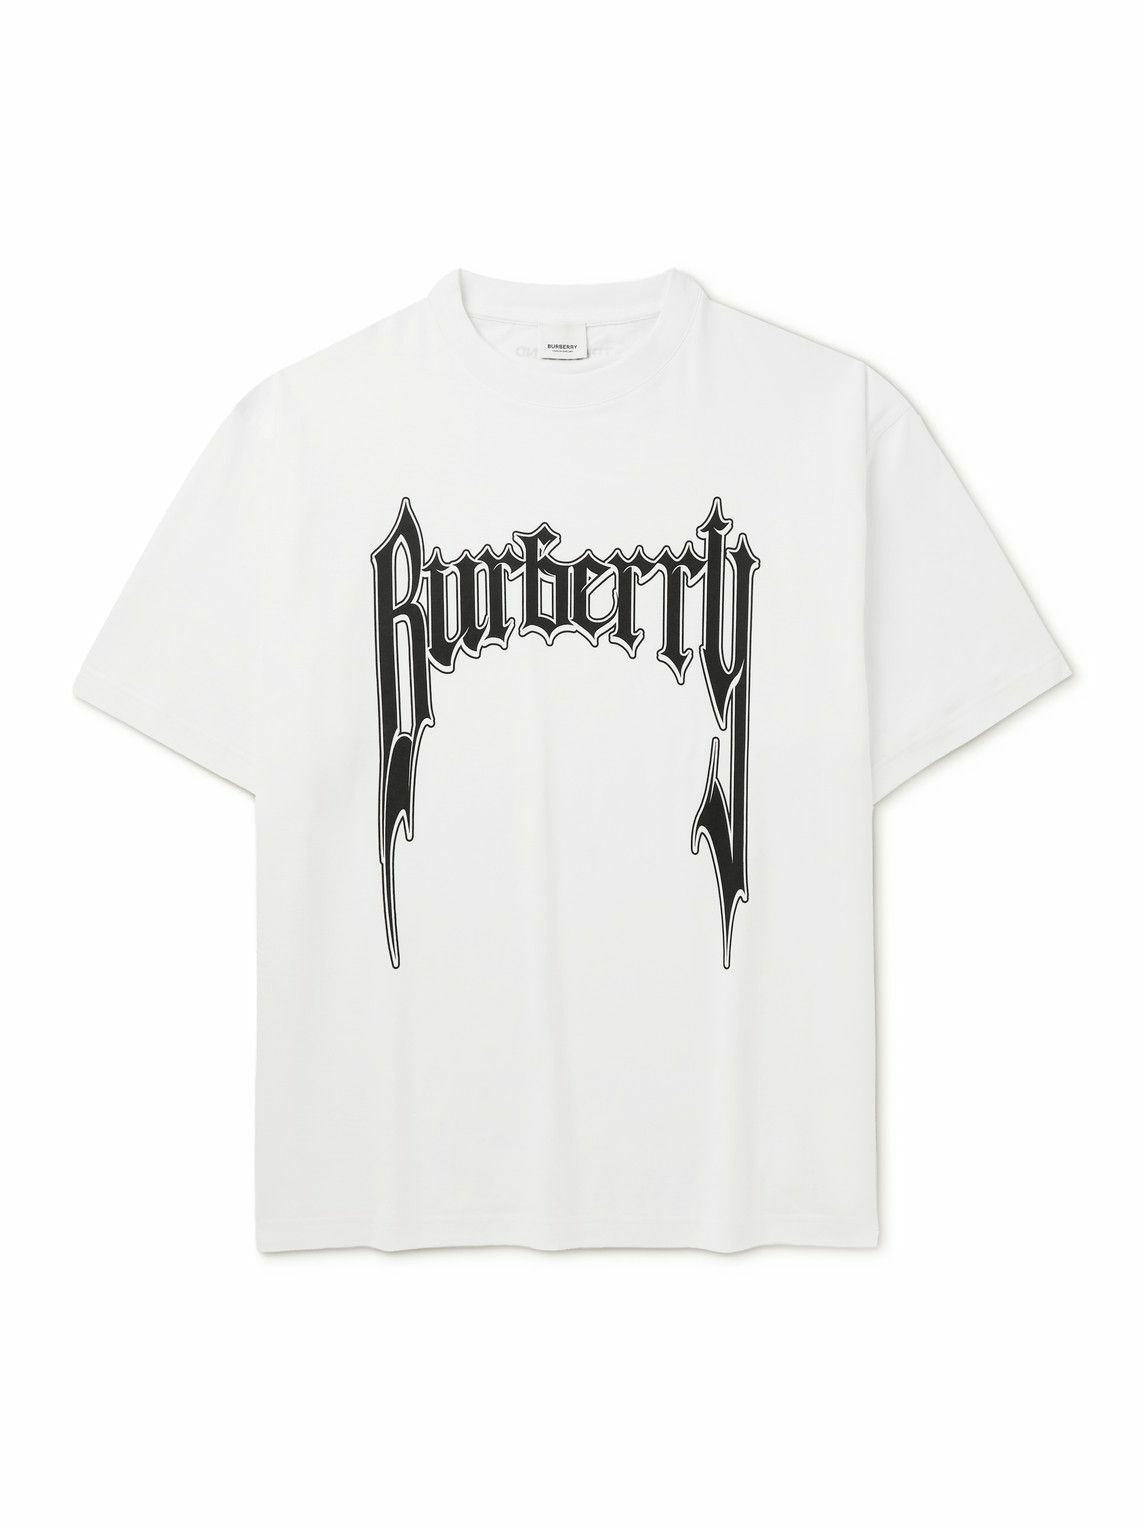 Burberry - Logo-Print Cotton-Jersey T-Shirt - White Burberry